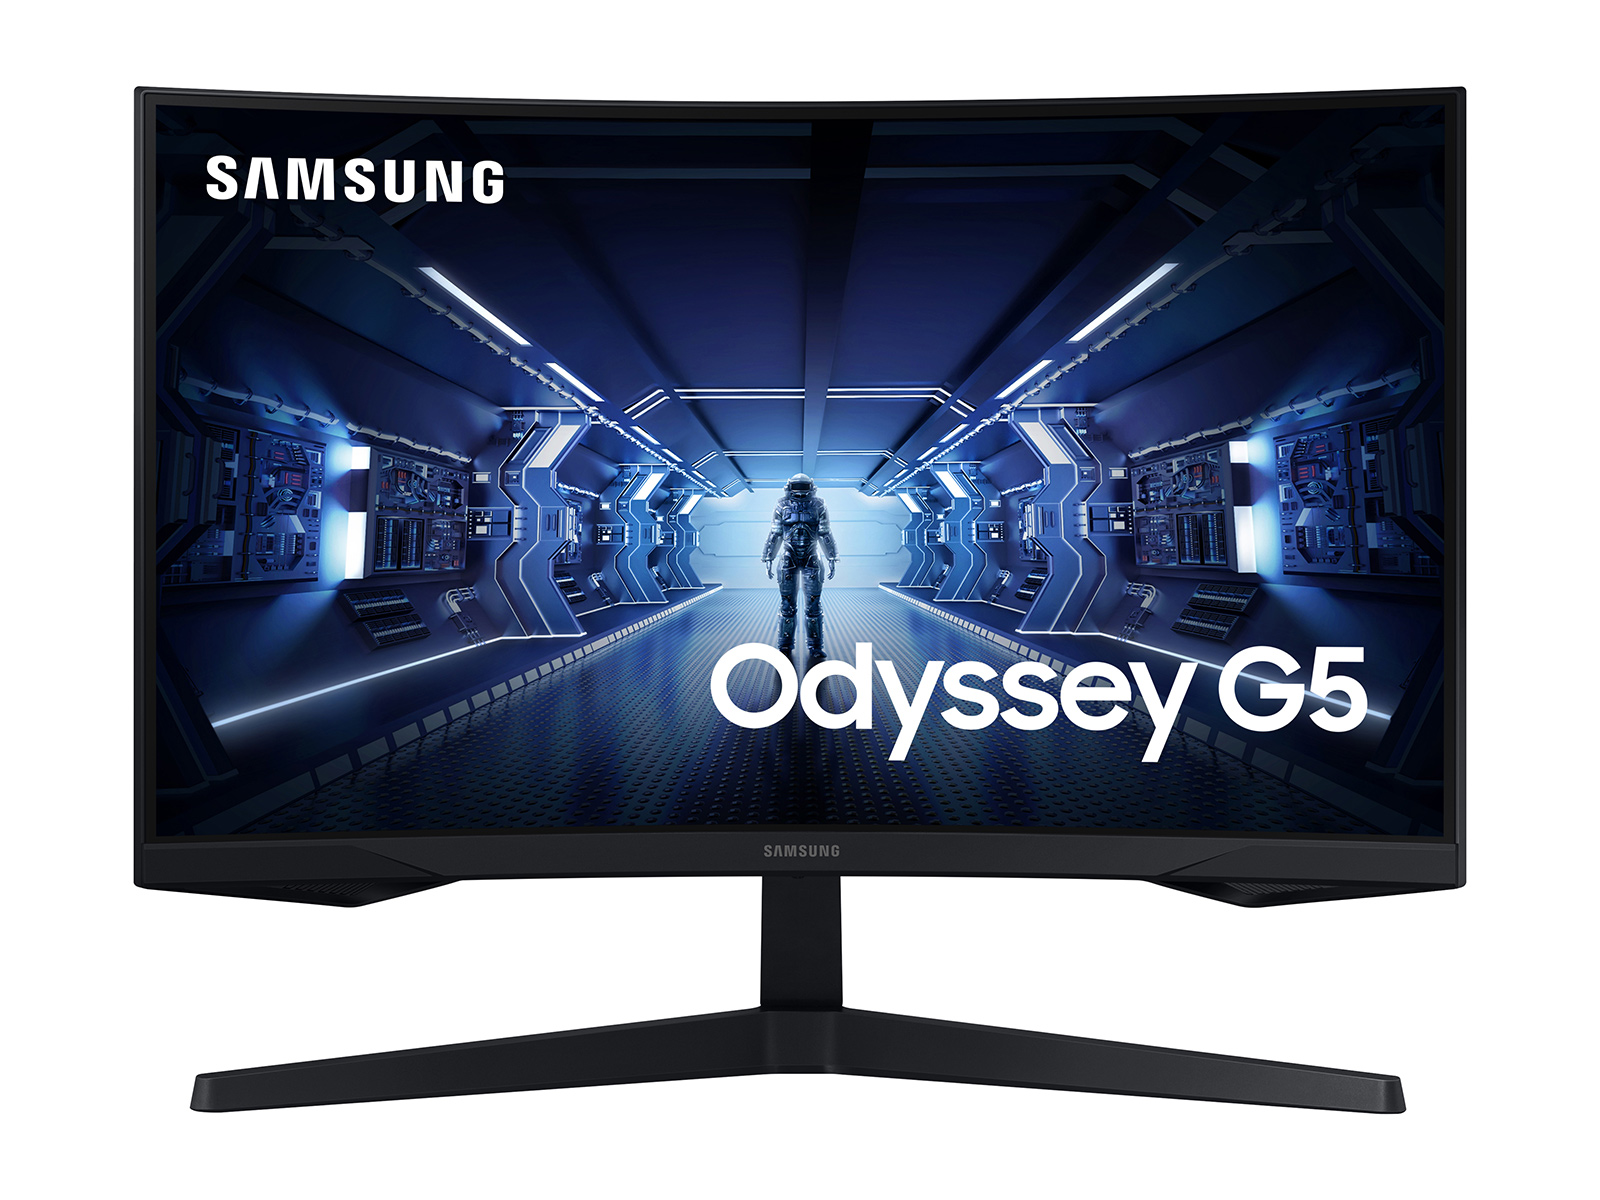 Samsung EPP/EDU: 27" Samsung G5 Odyssey 2560x1440 VA 144Hz 1000R Curved Monitor $210 + Free Shipping